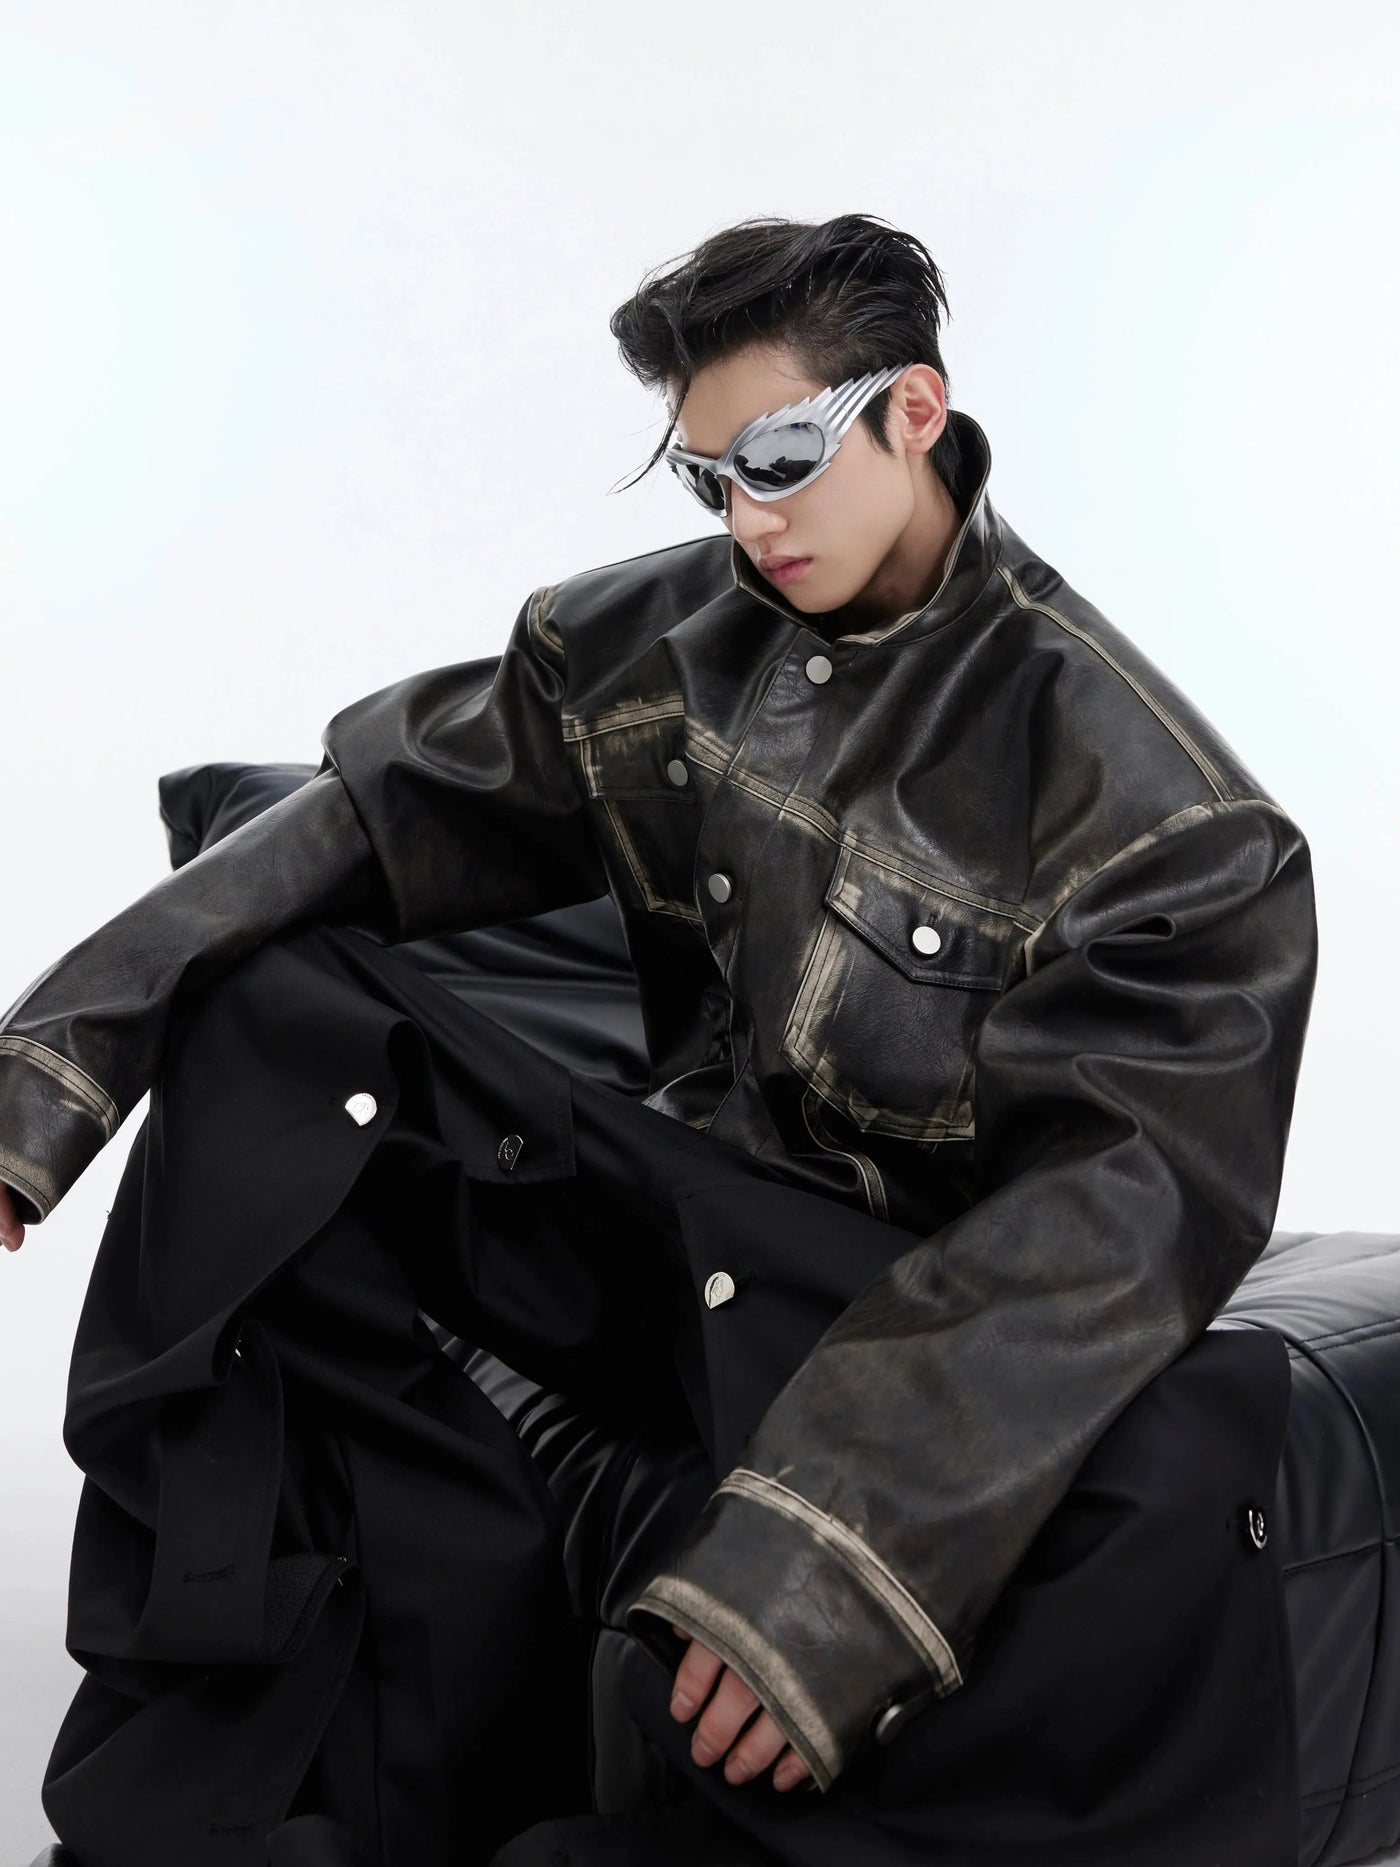 Fade Smudge Leather Jacket Korean Street Fashion Jacket By Argue Culture Shop Online at OH Vault